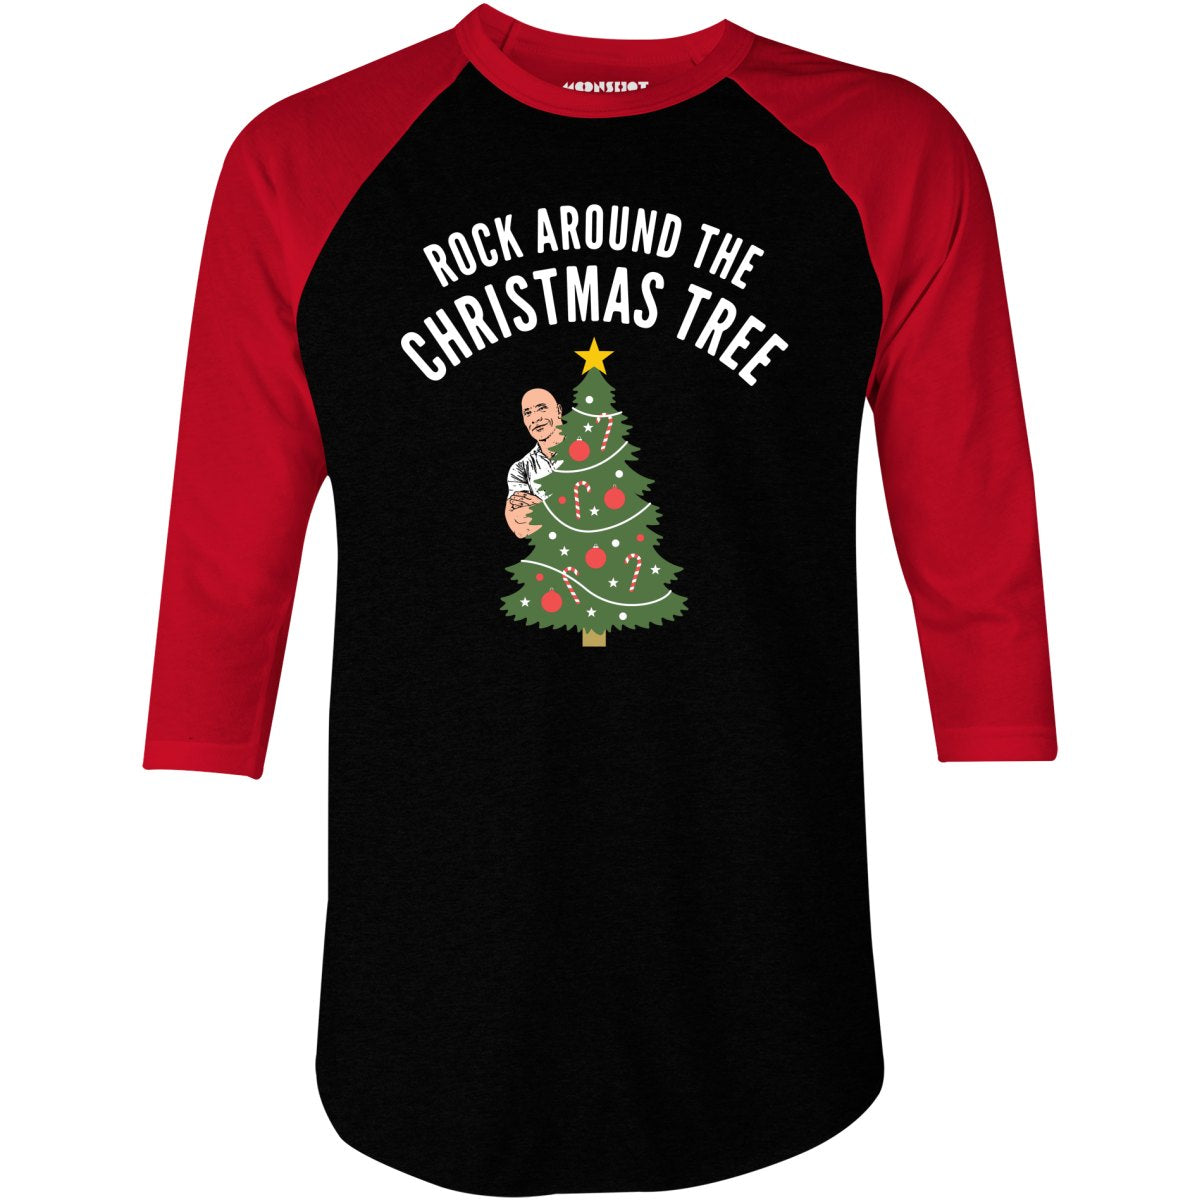 Rock Around the Christmas Tree - 3/4 Sleeve Raglan T-Shirt